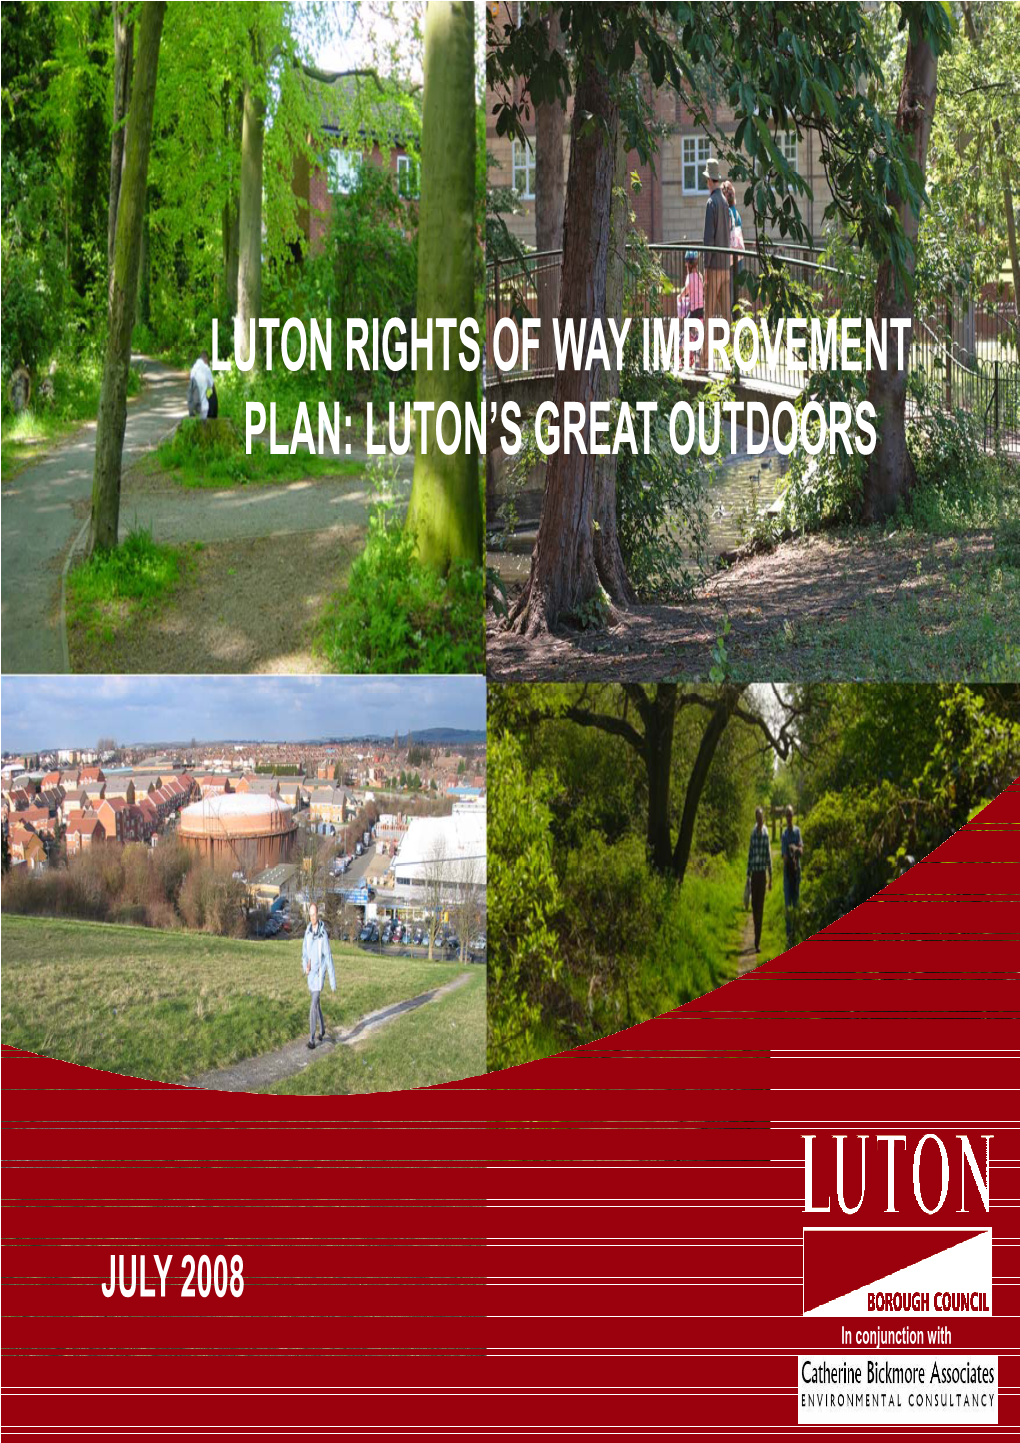 Luton Rights of Way Improvement Plan: Luton's